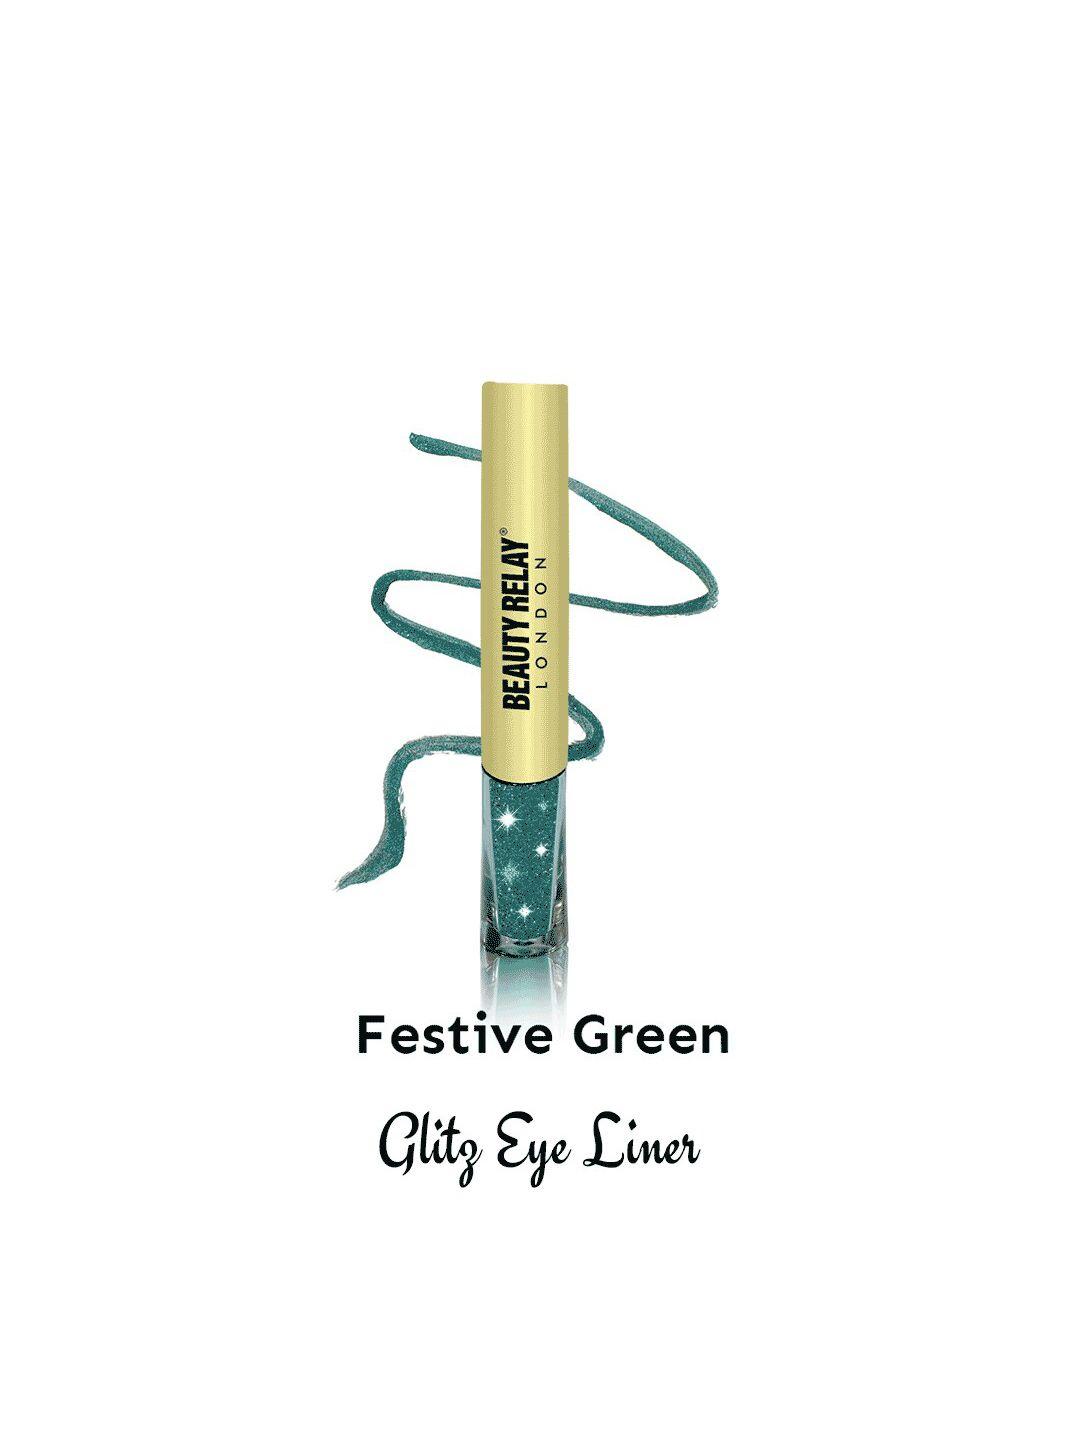 beautyrelay london make your eyes twinkle glitz eye liner 2.5ml - festive green